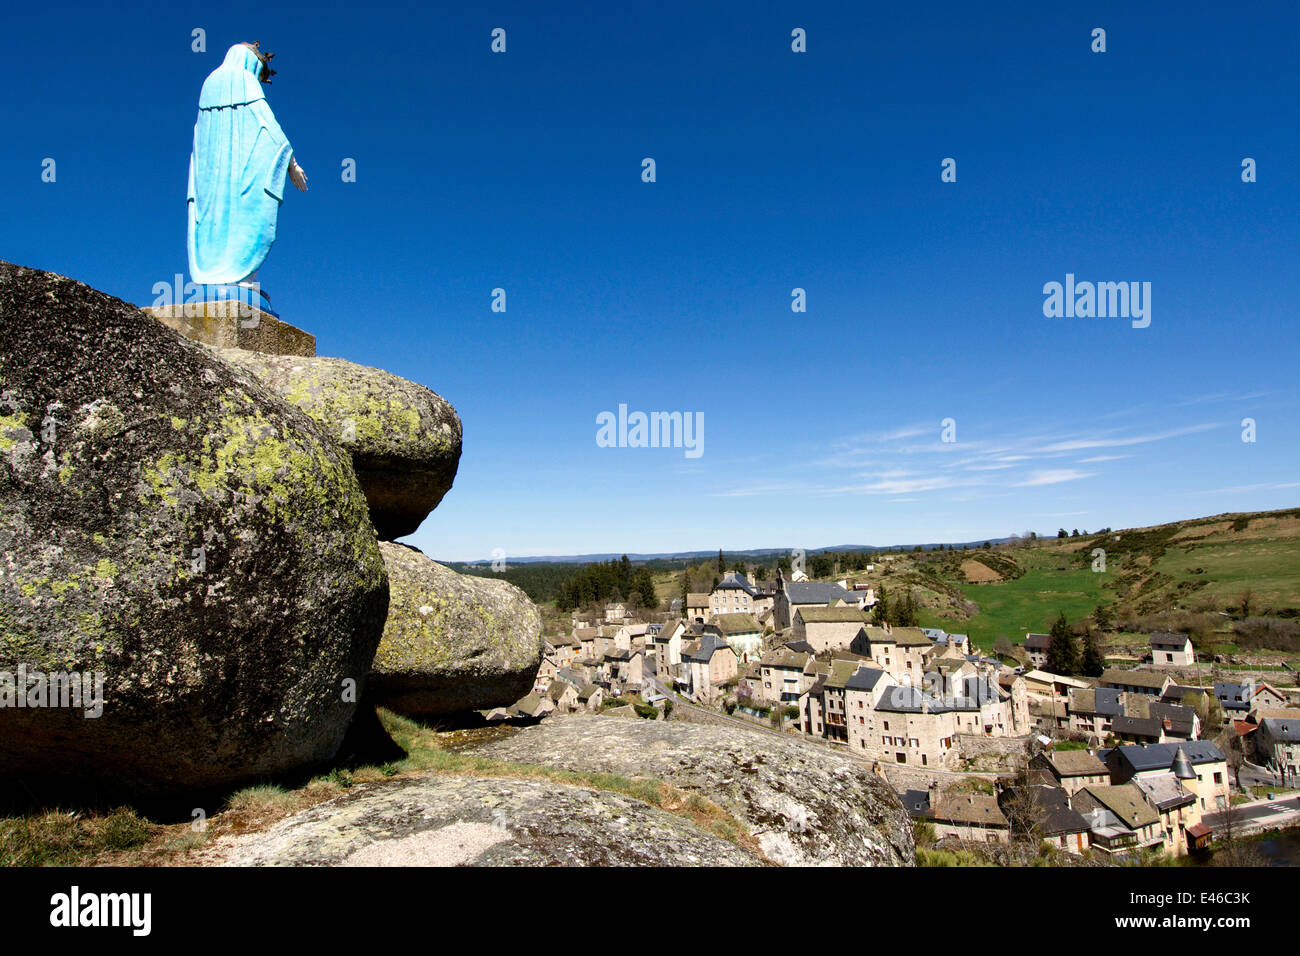 Aldea de Serverette, valle del Truyere, Gevaudan, Margeride, Lozere, Languedoc-Roussillon, Francia, Europa - con la Virgen María Foto de stock